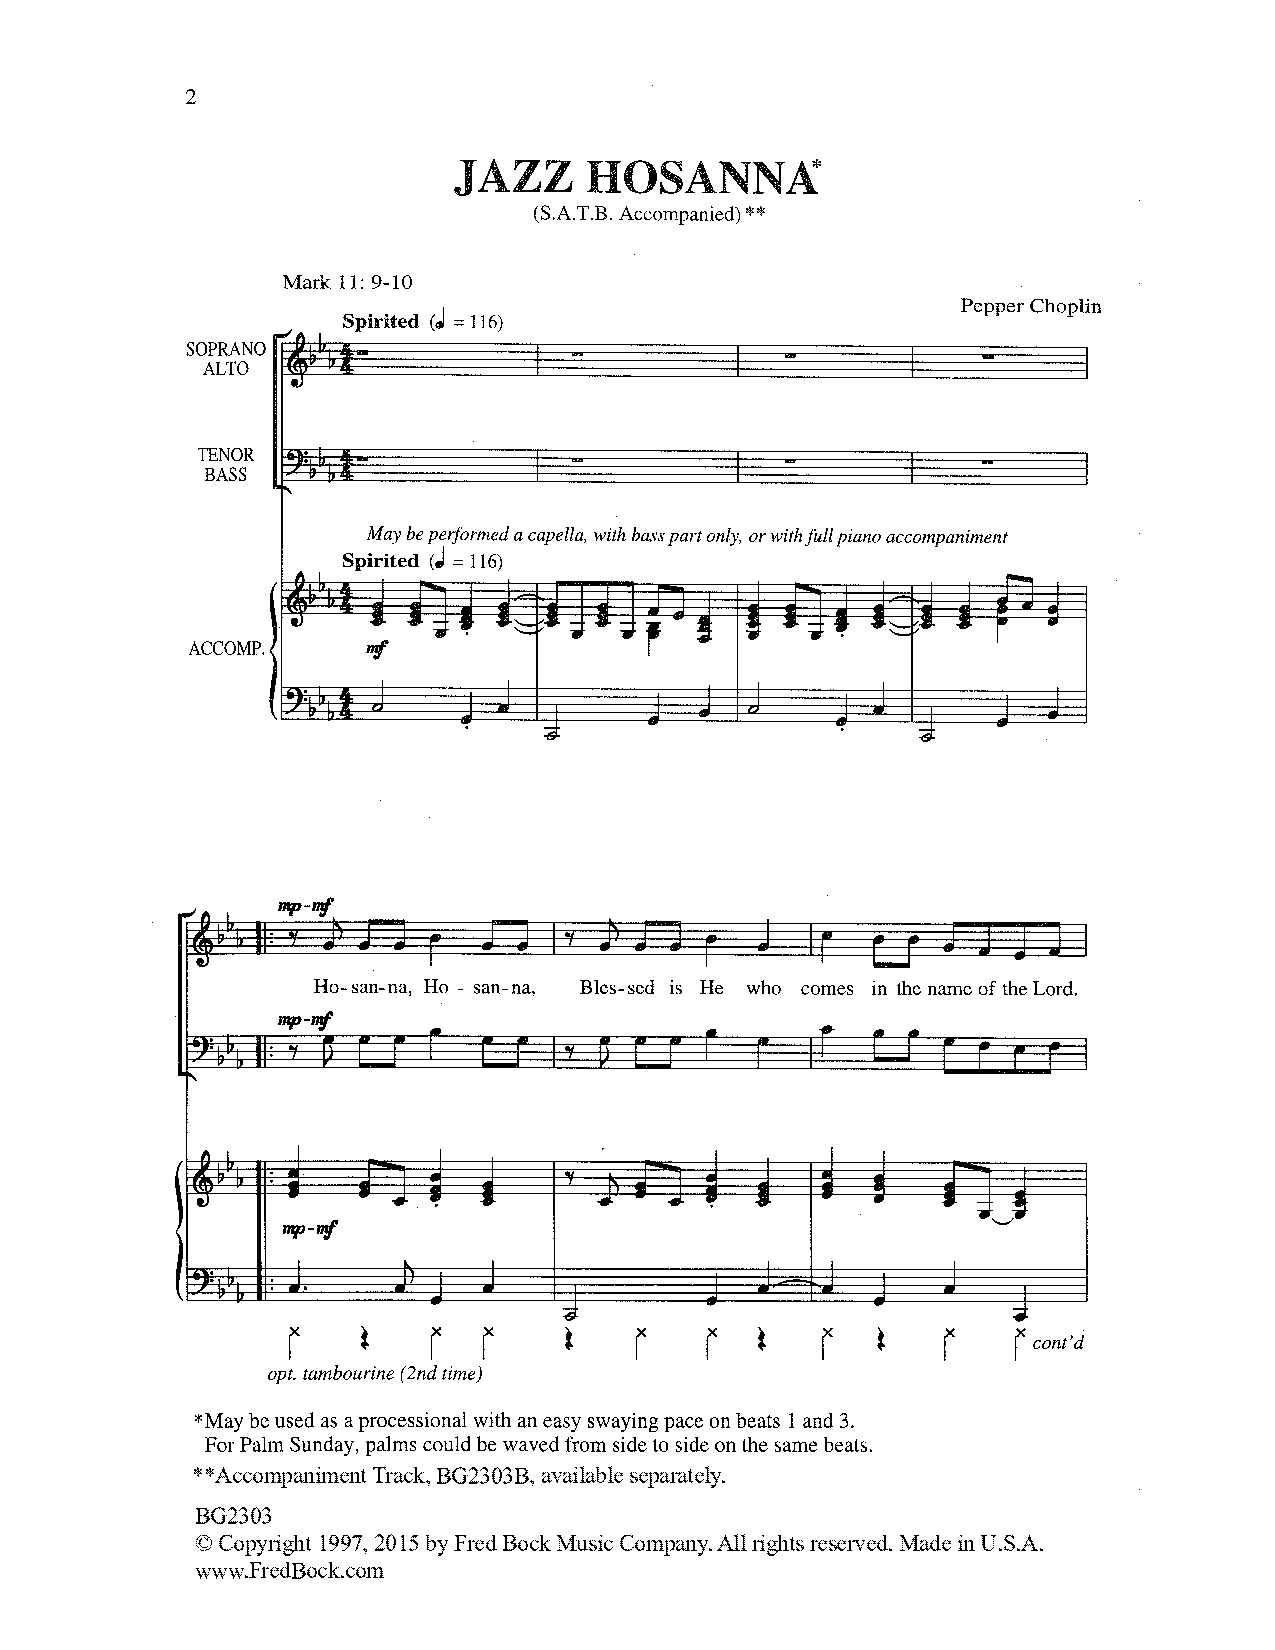 Pepper Choplin Jazz Hosanna Sheet Music Notes & Chords for Choral - Download or Print PDF